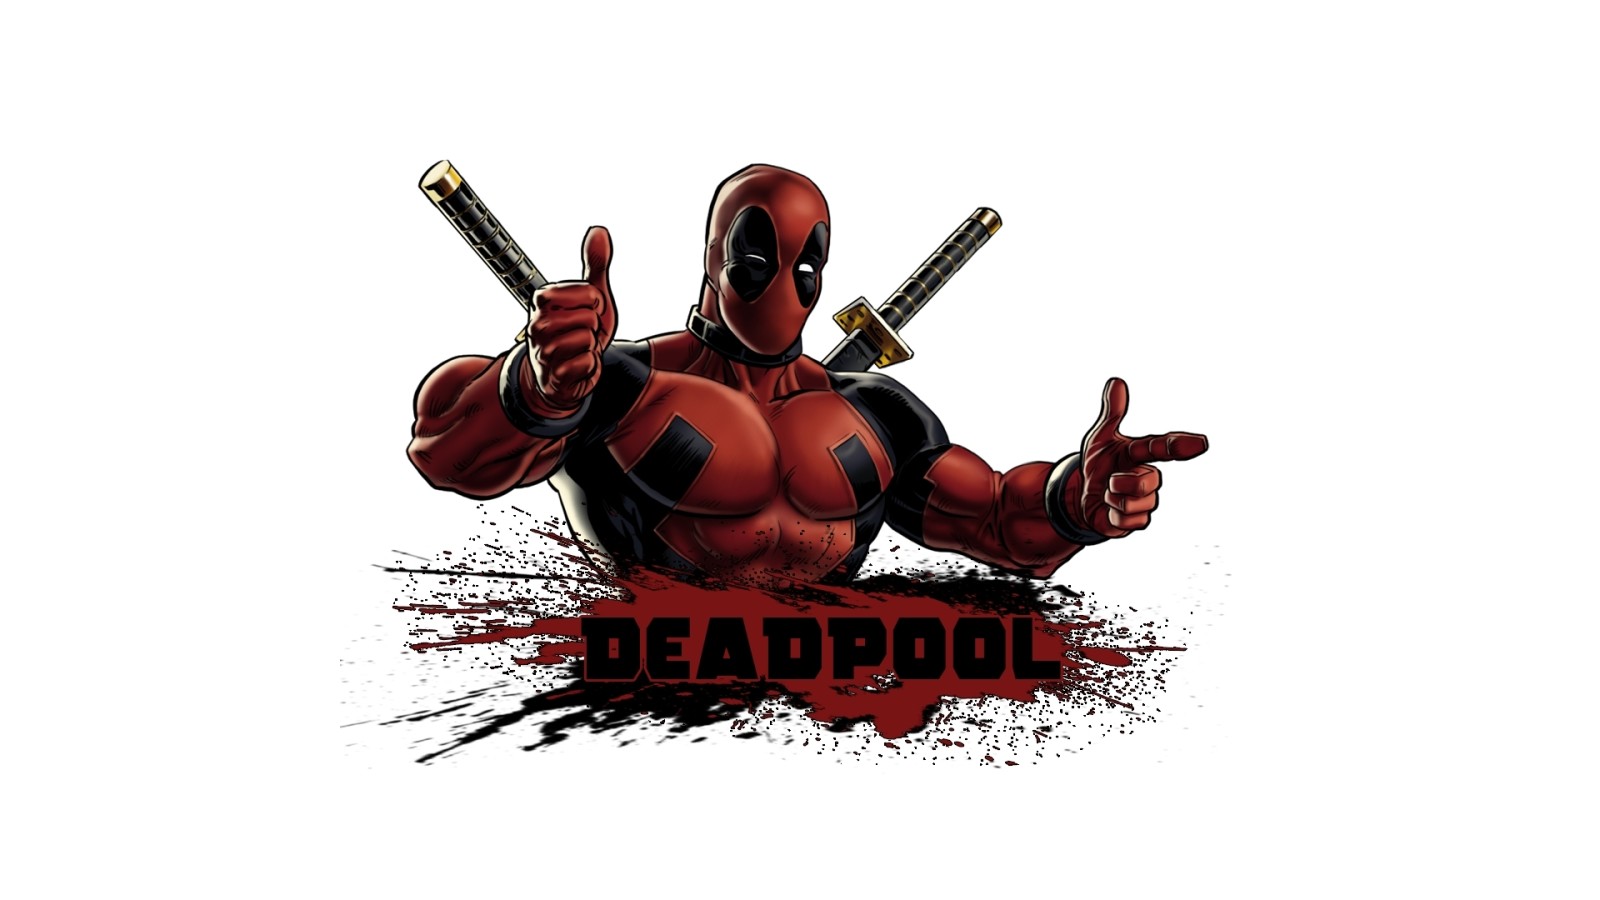 tư thế, trang phục, kiếm, máu, Deadpool